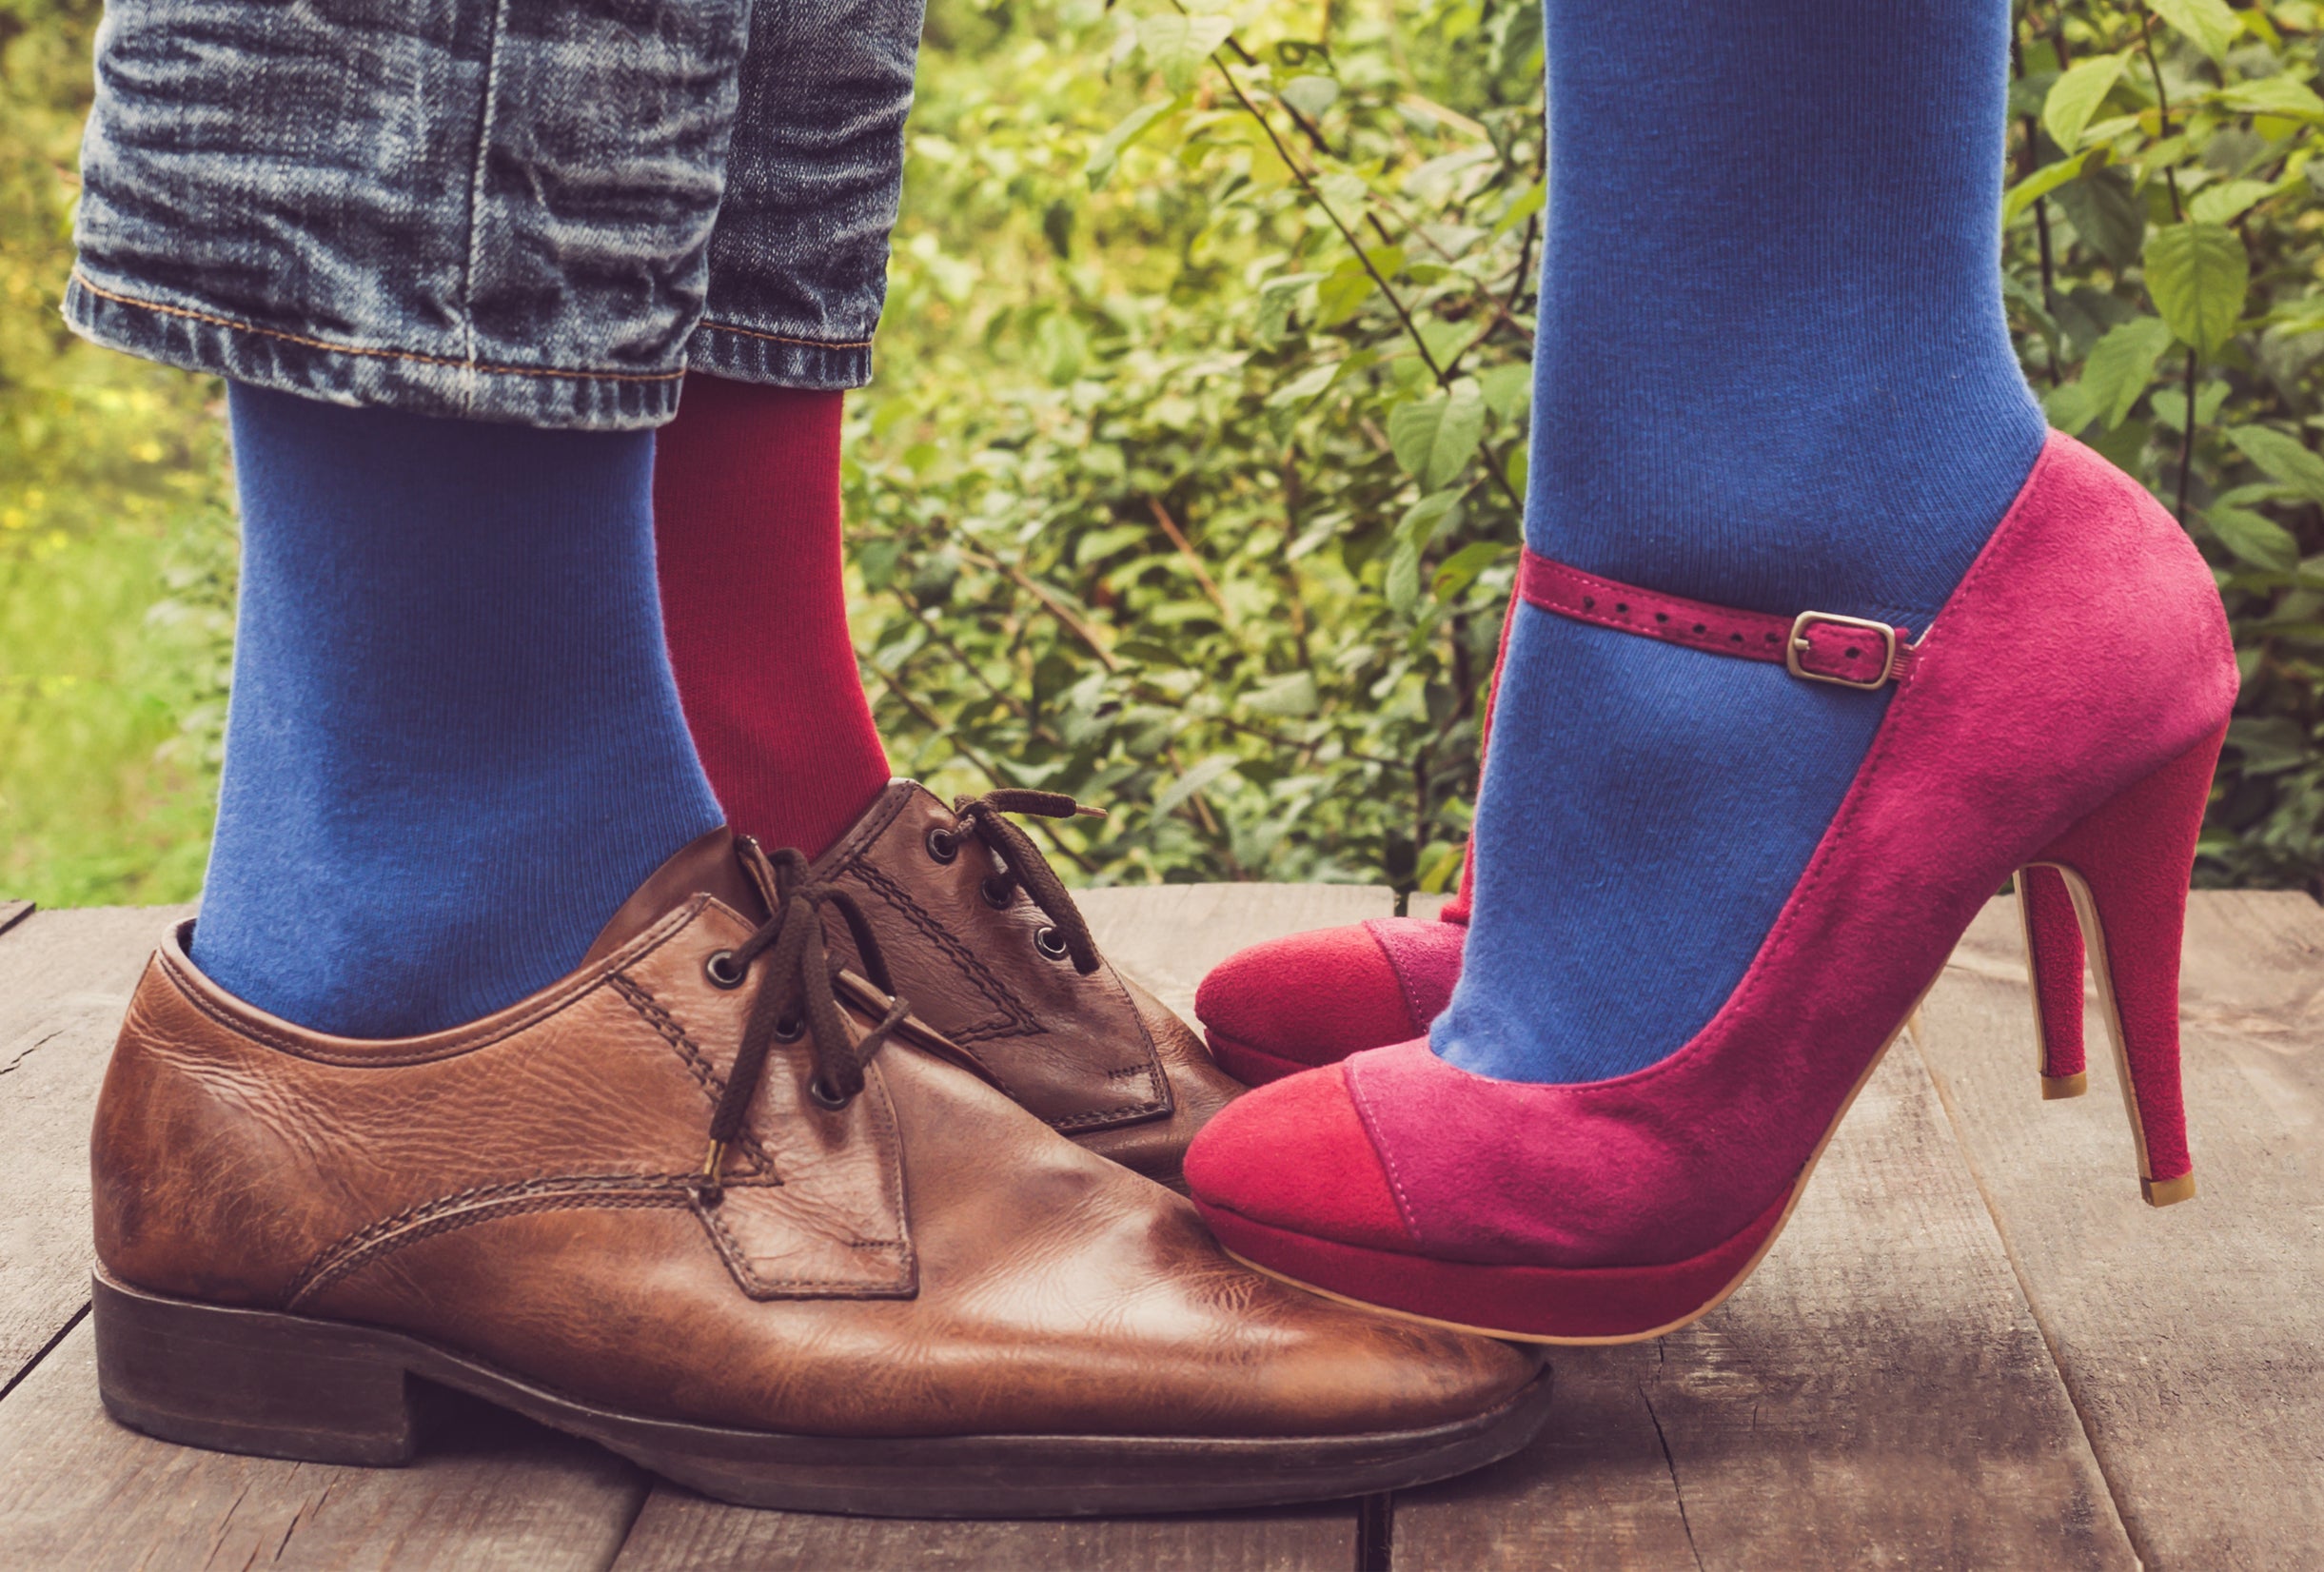 Socks for toeless shoes | Diy fashion hacks, New things to learn, Diy socks